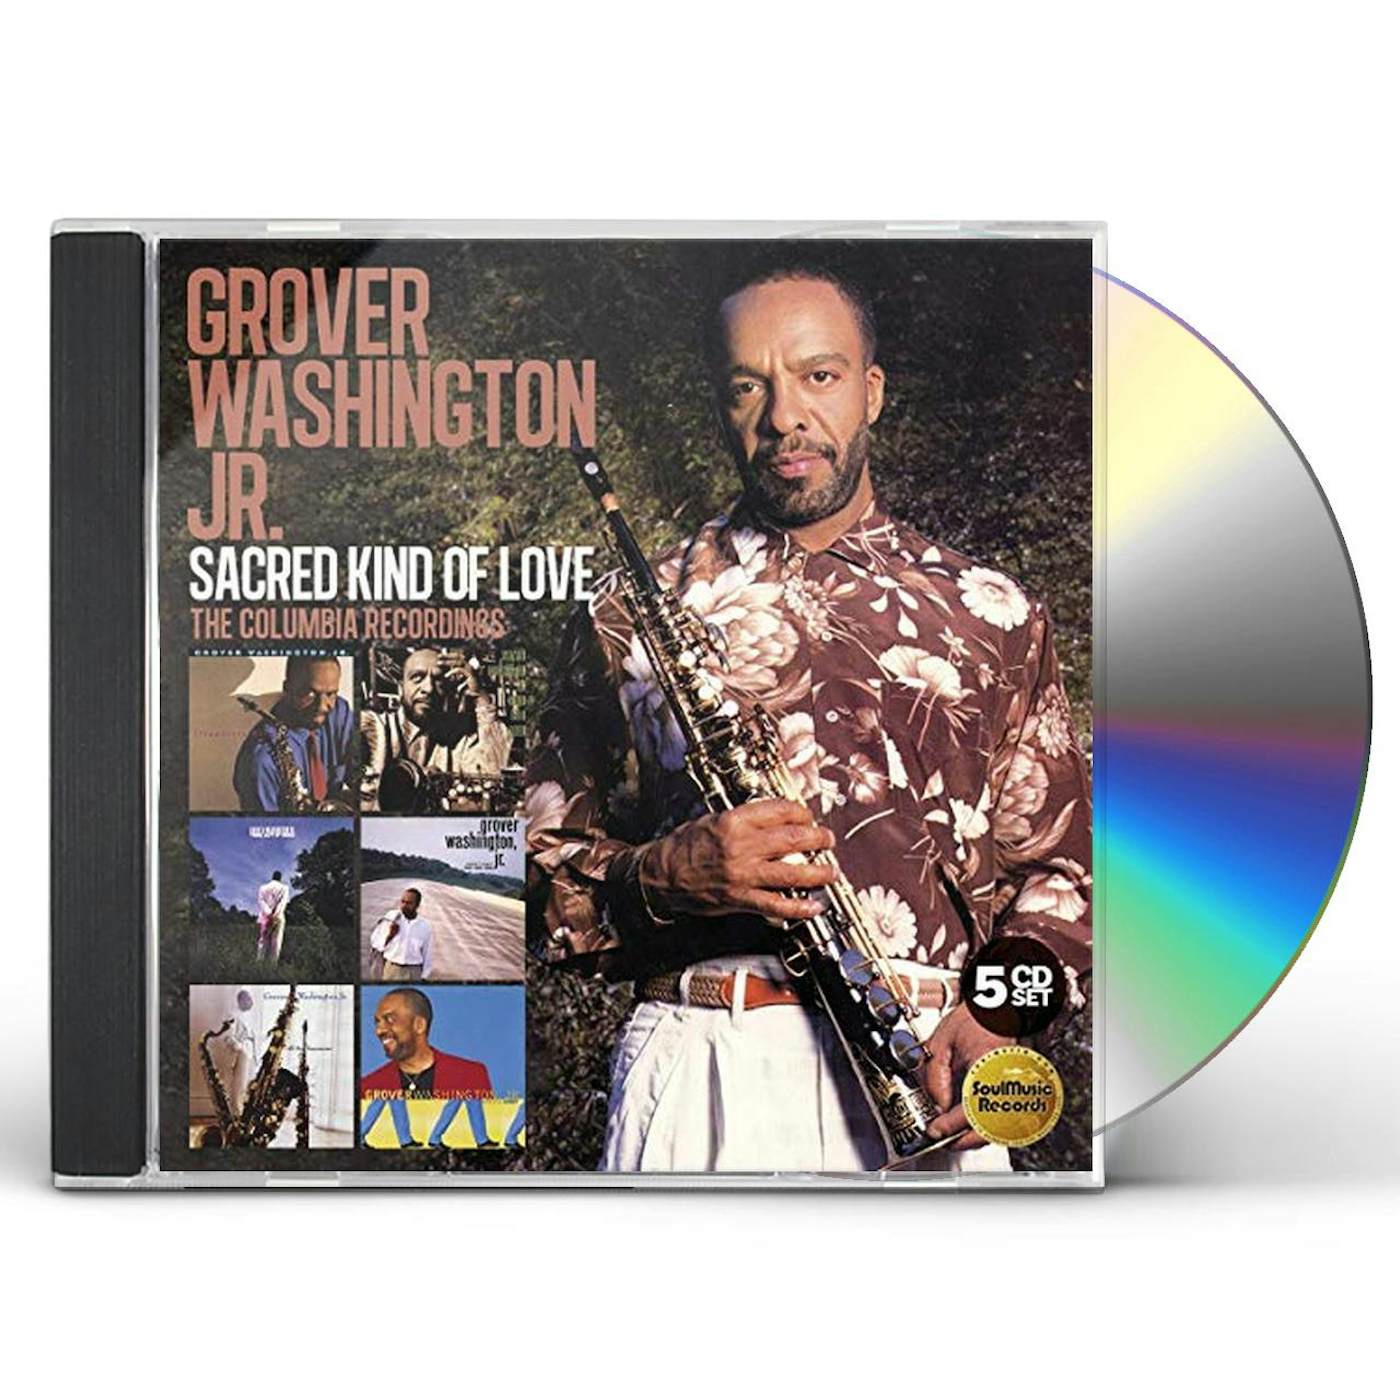 Grover Washington, Jr. SACRED KIND OF LOVE: THE COLUMBIA RECORDINGS CD